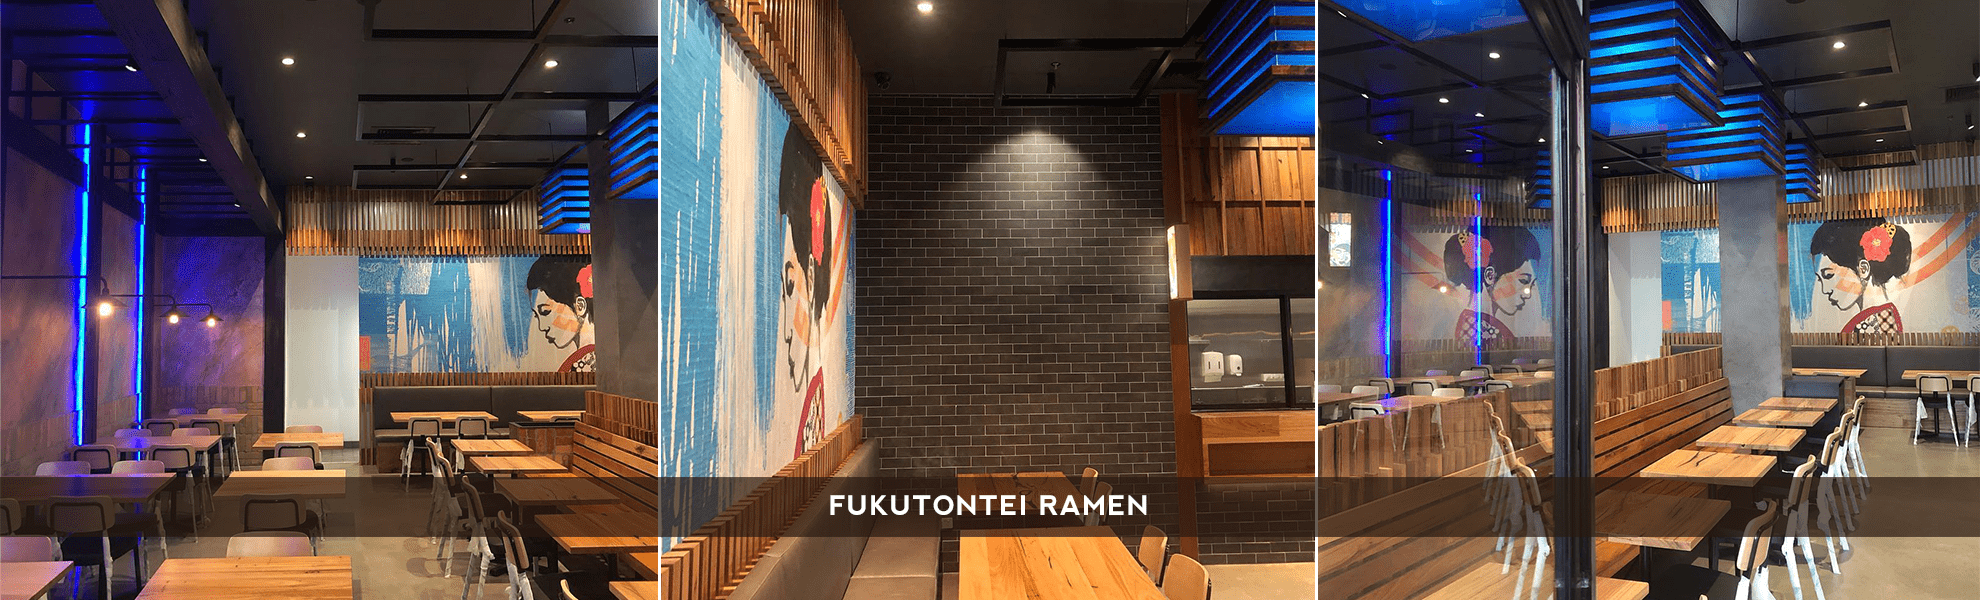 Fukutontei Ramen JMH Wholesale Furniture